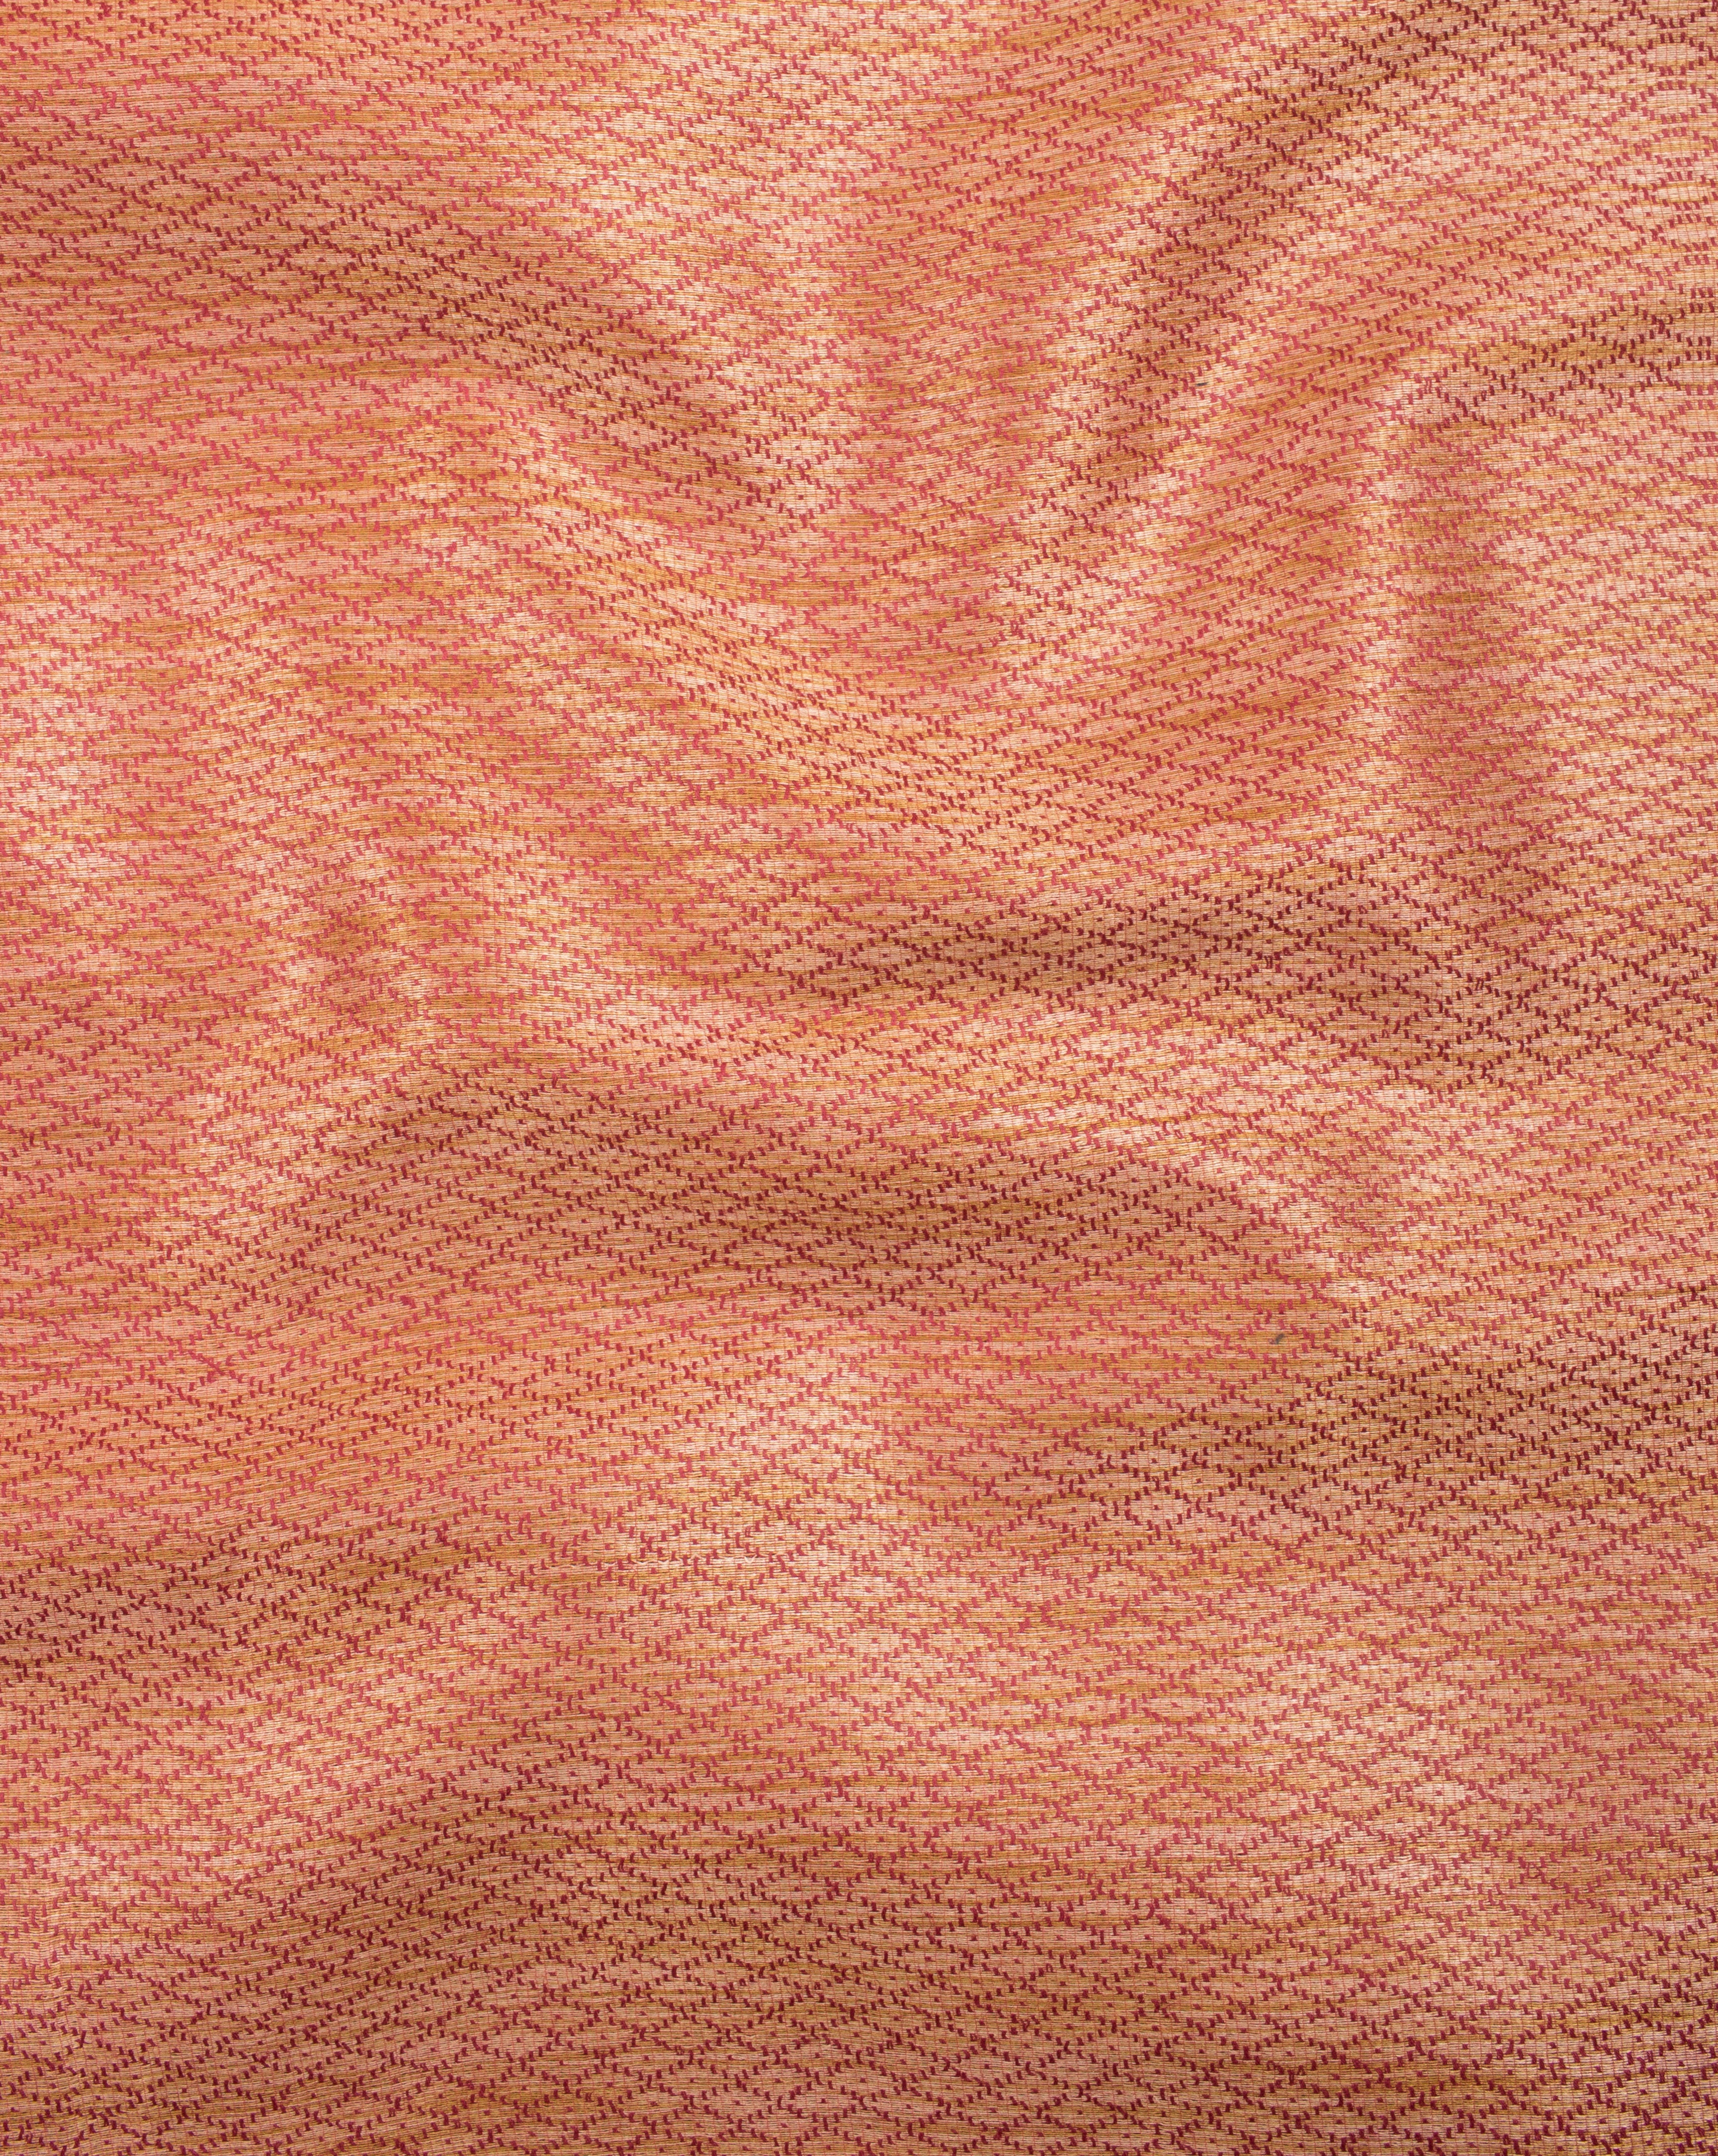 Salmon Gold Geometric Jacquard Blended Cotton Fabric - Fabriclore.com